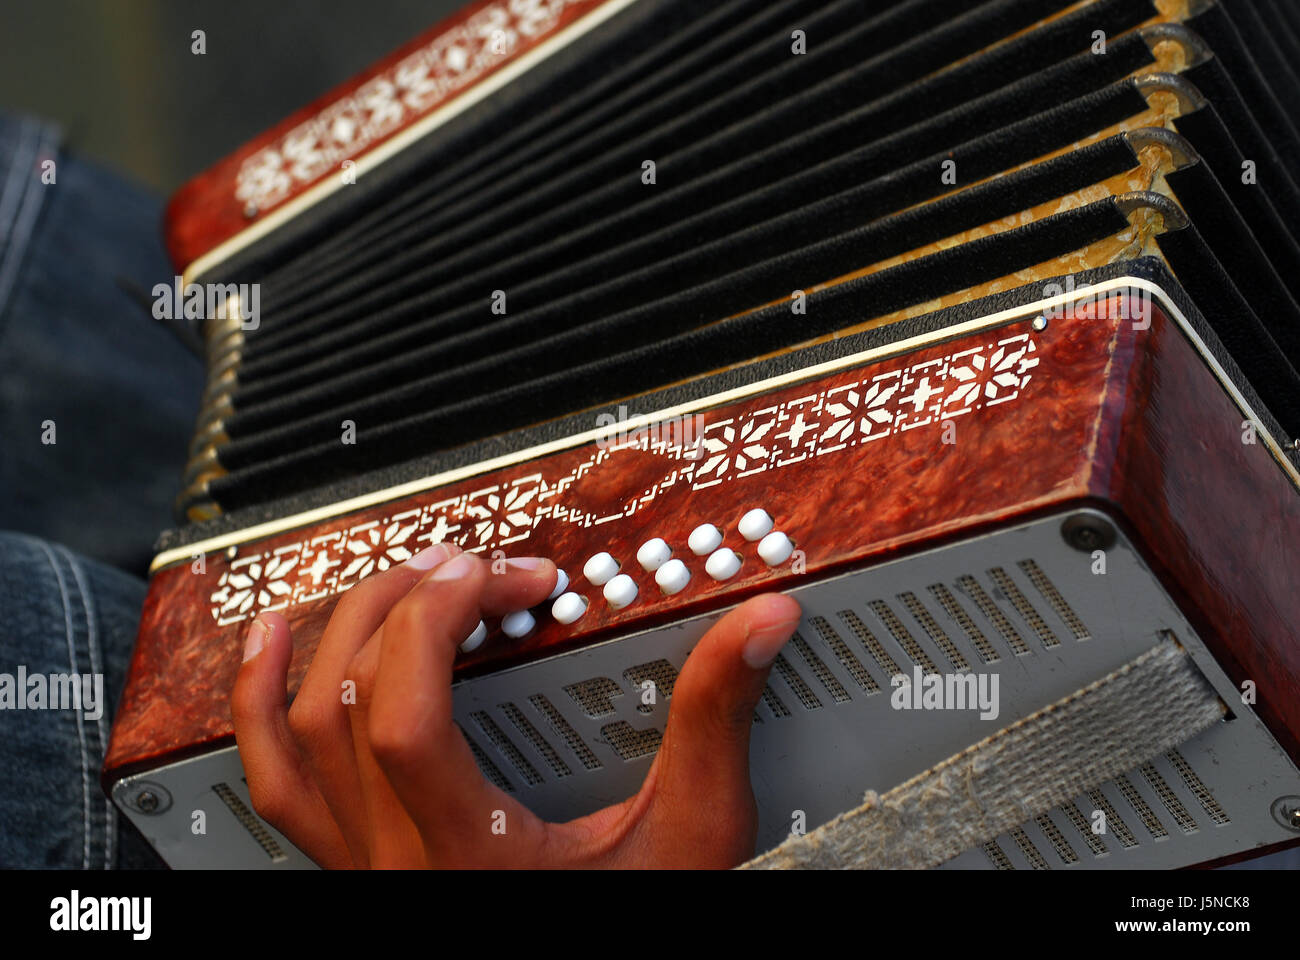 keyboard musical instrument accordion harmonica concertina measure instrument Stock Photo